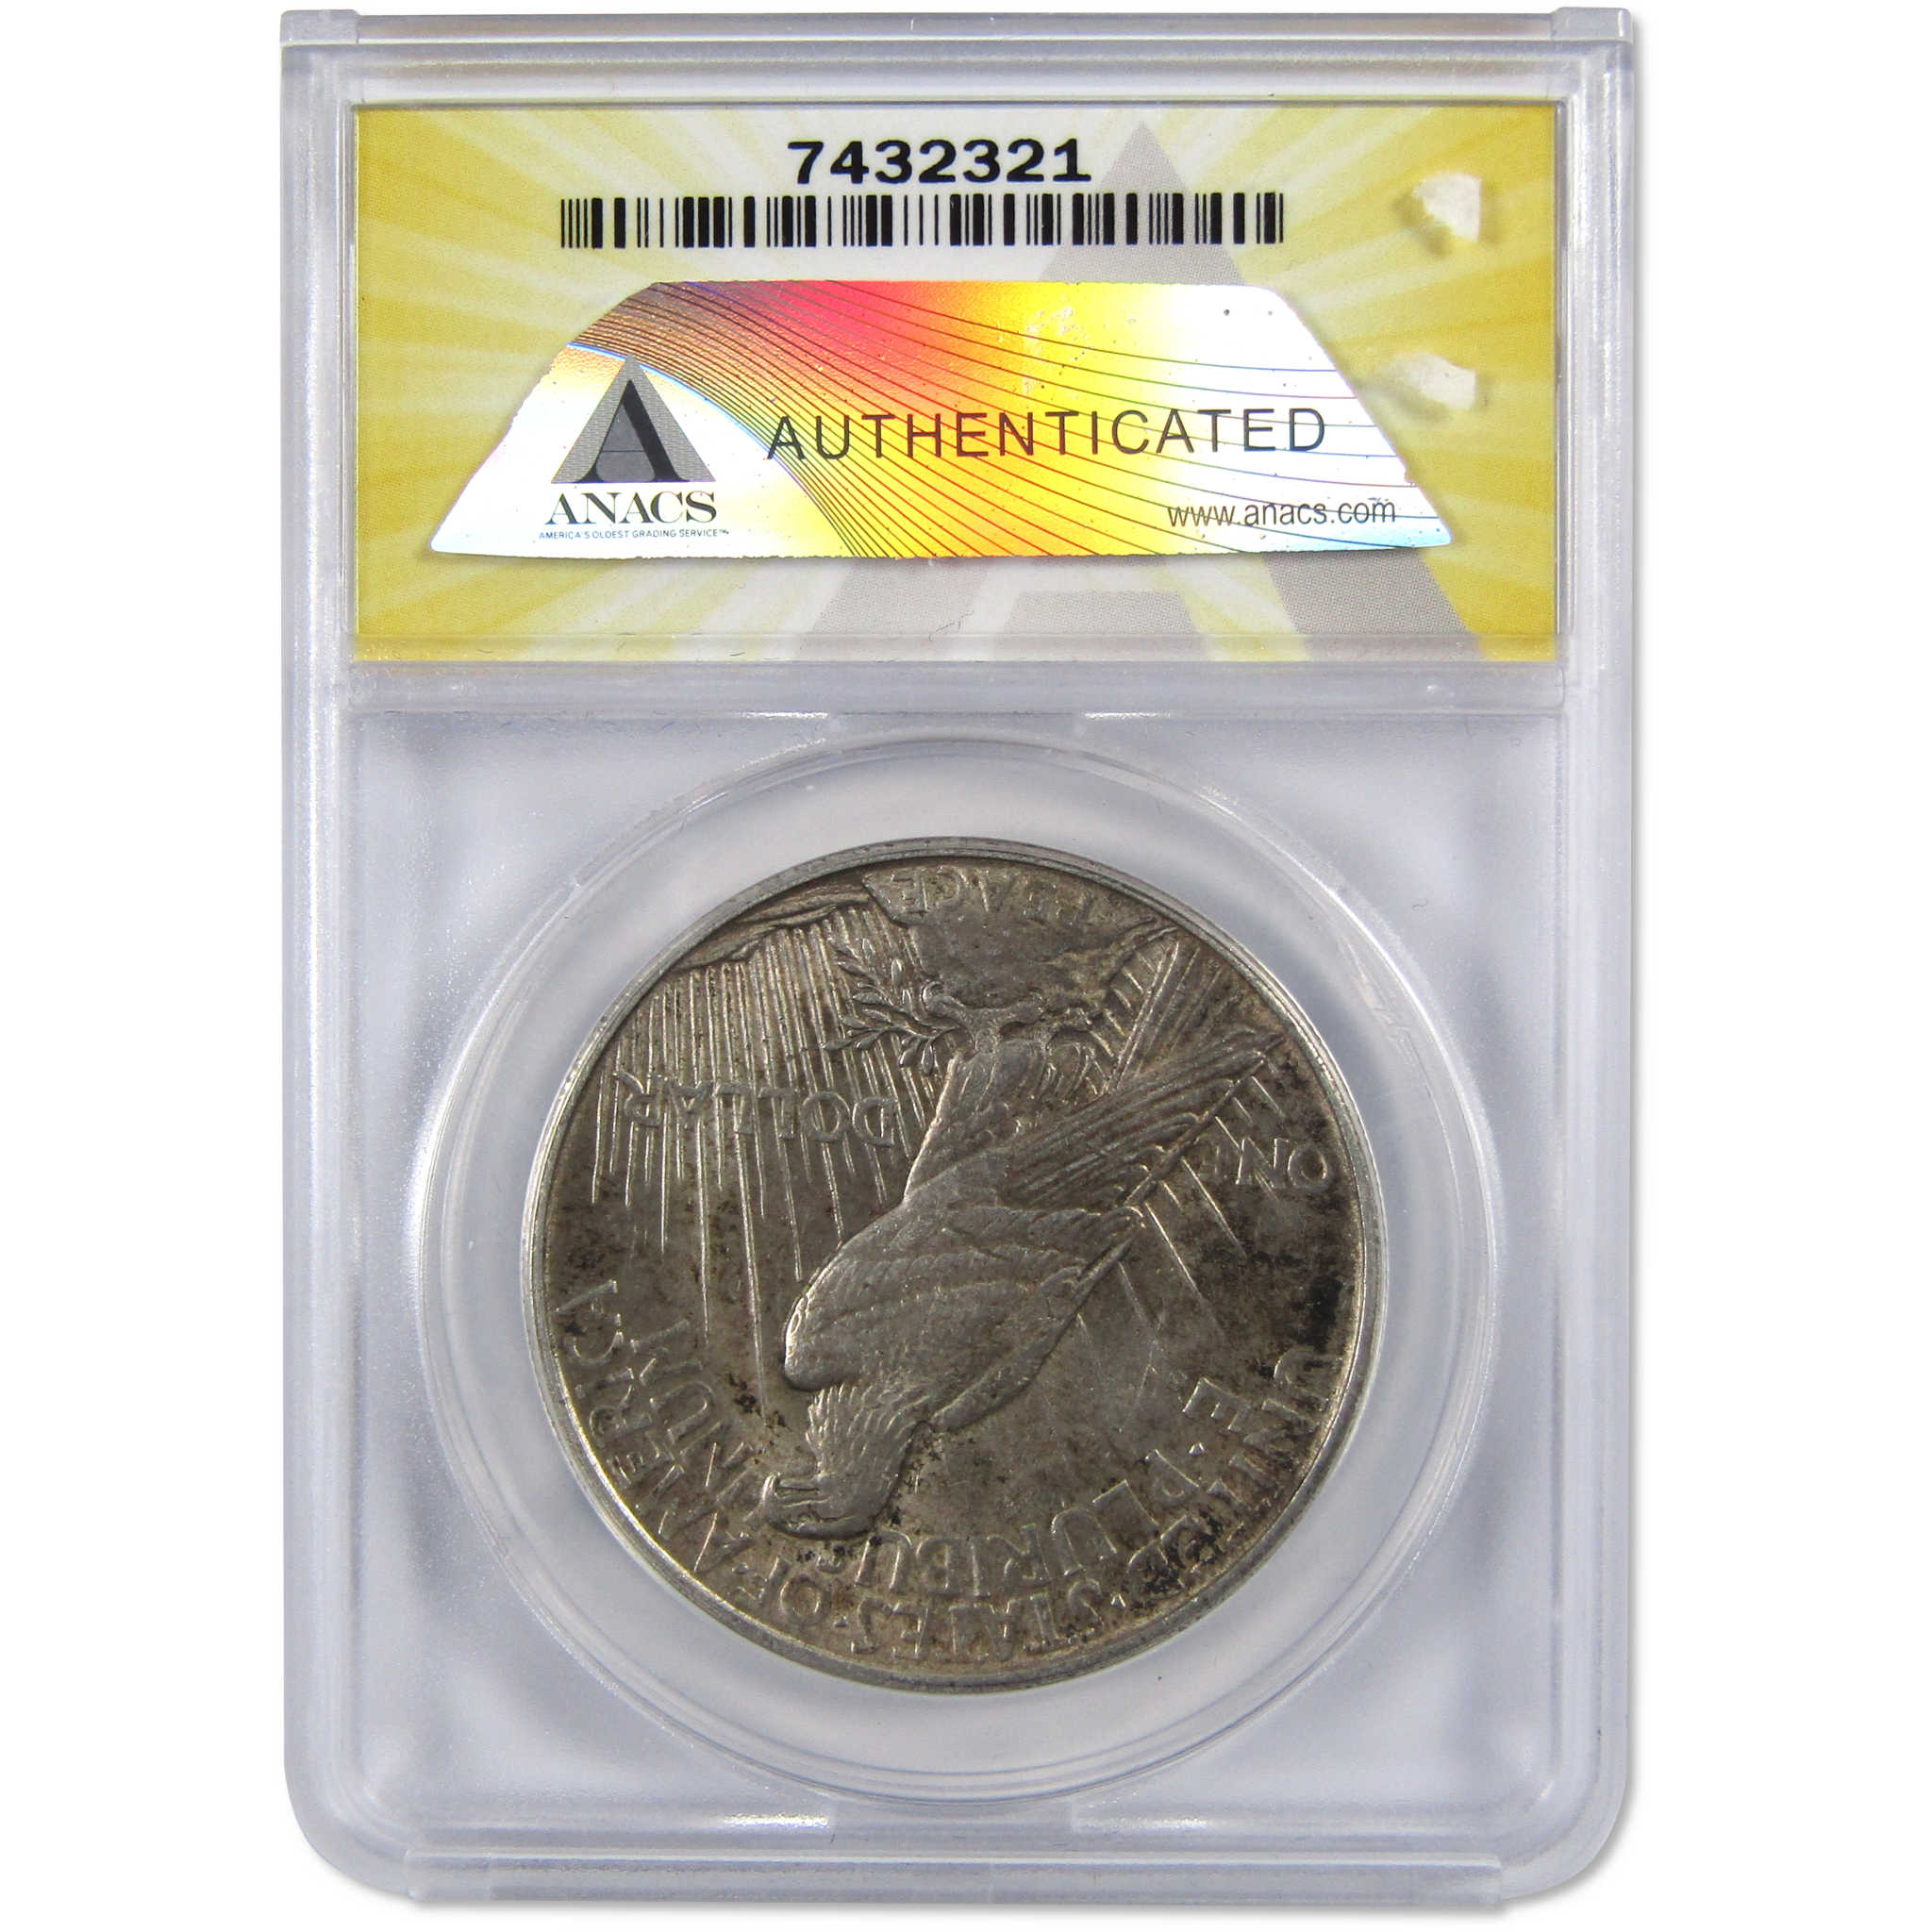 1921 High Relief Peace Dollar AU 50 ANACS 90% Silver $1 Coin SKU:I5980